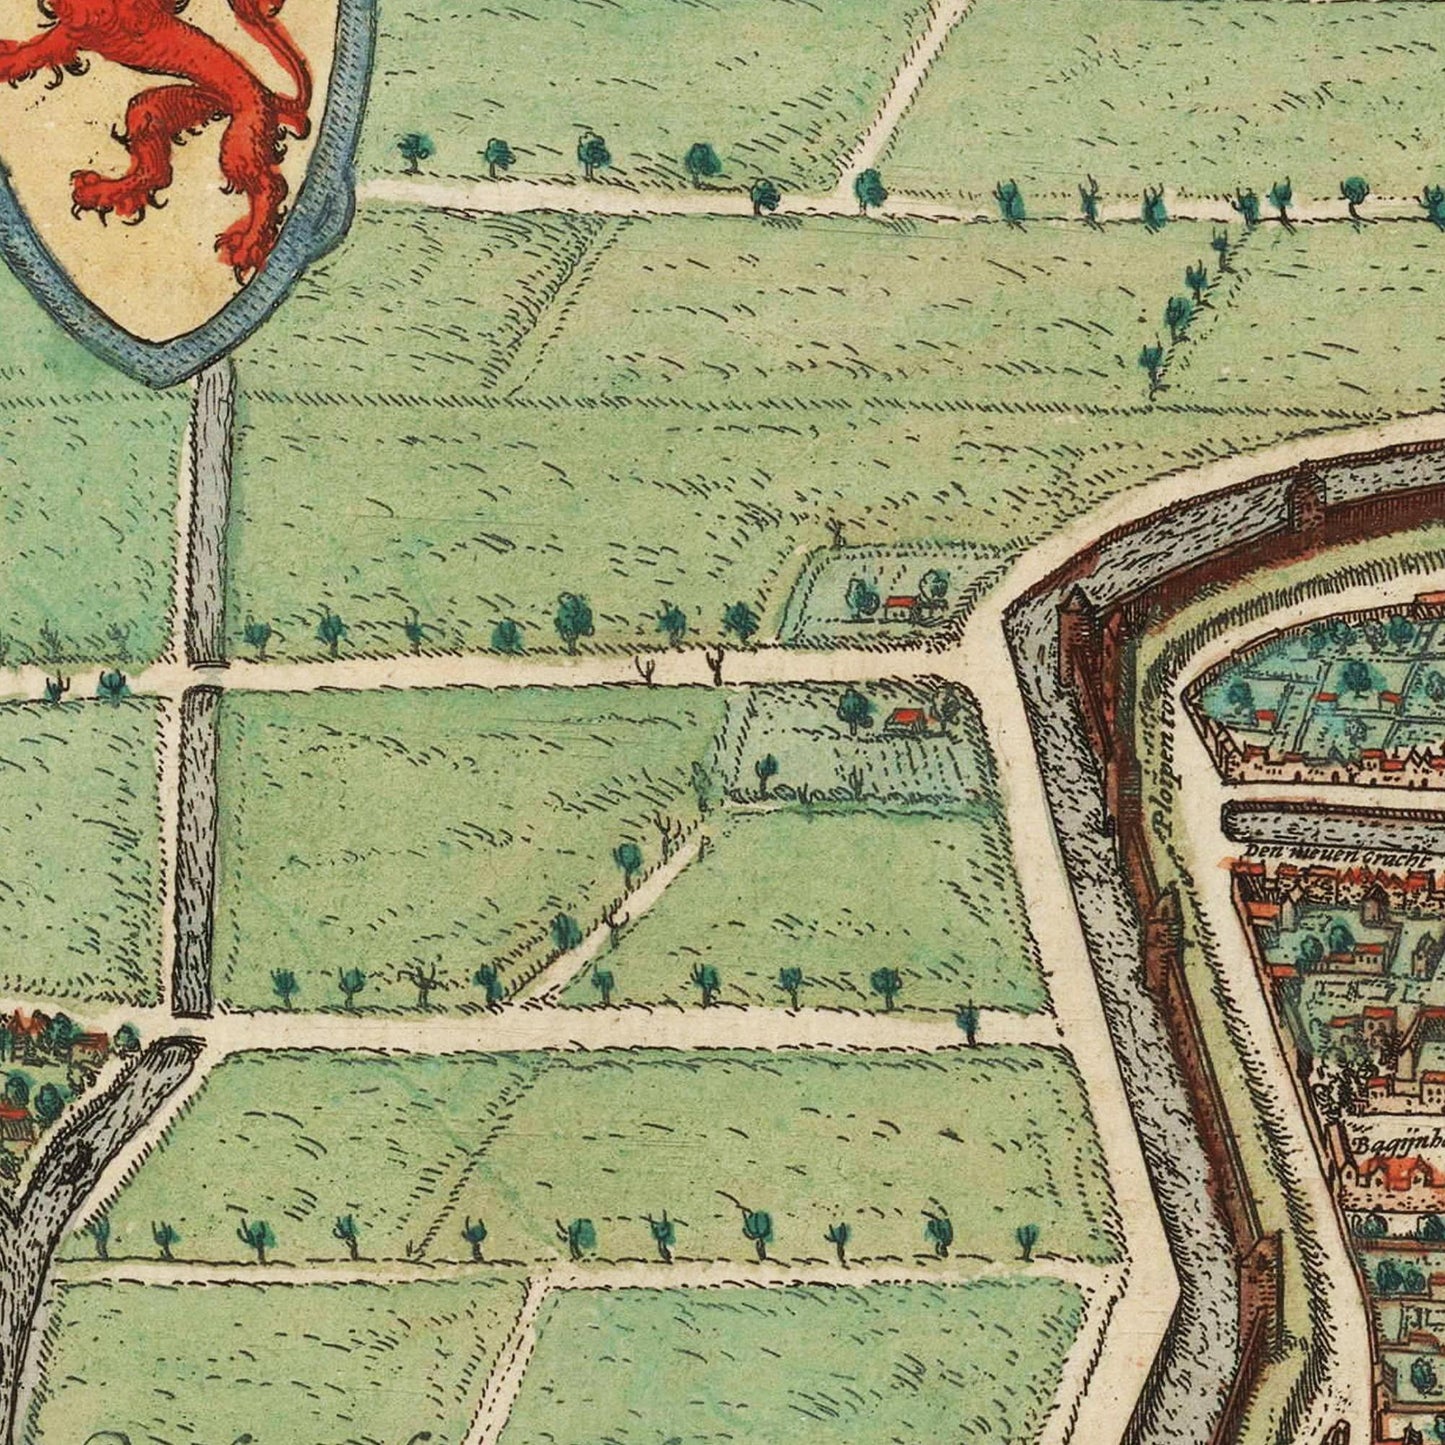 Historischer Stadtplan Utrecht um 1582